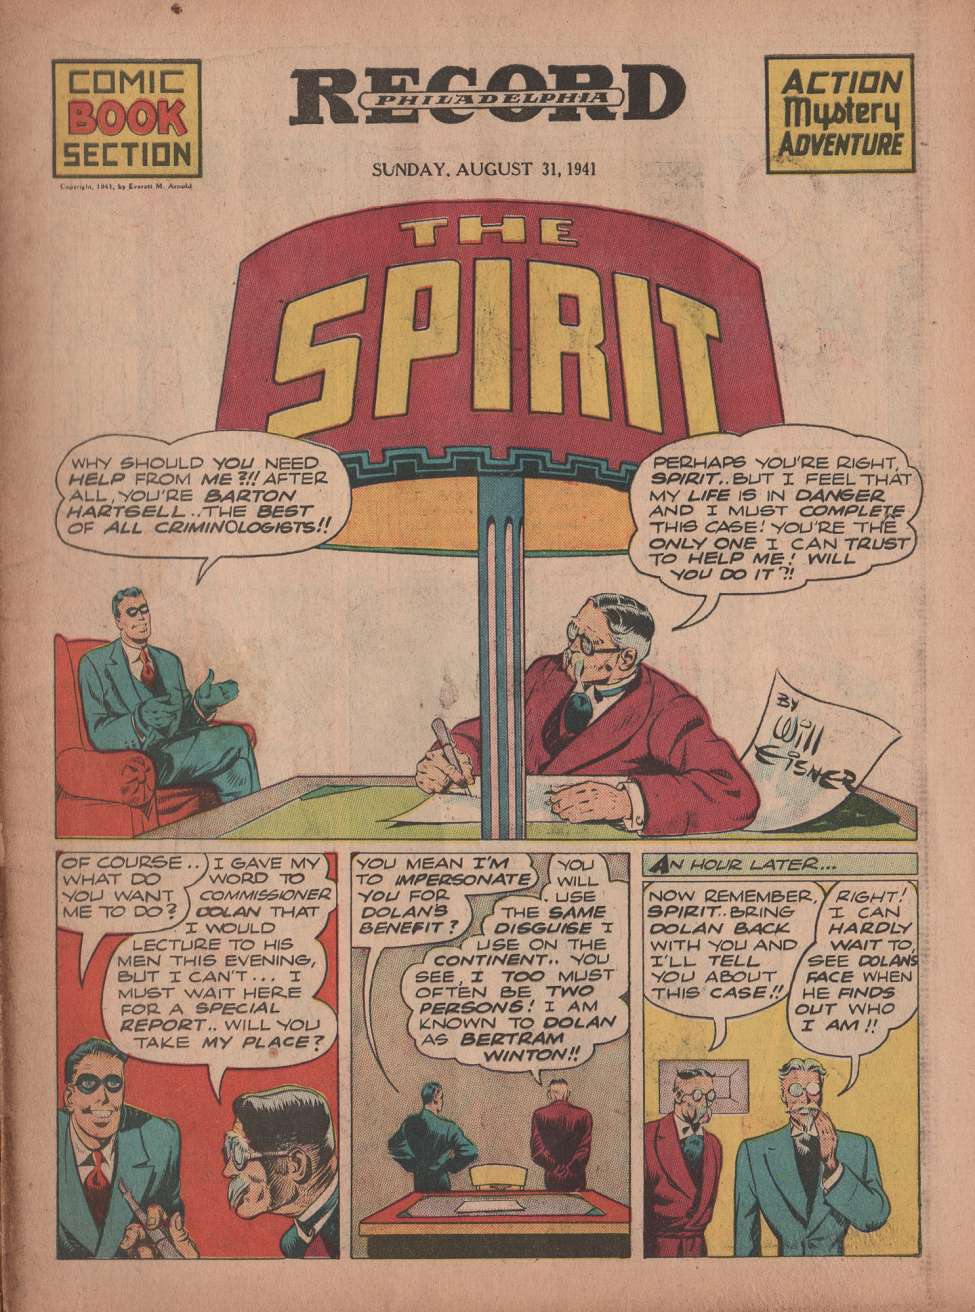 Comic Book Cover For The Spirit (1941-08-31) - Philadelphia Record